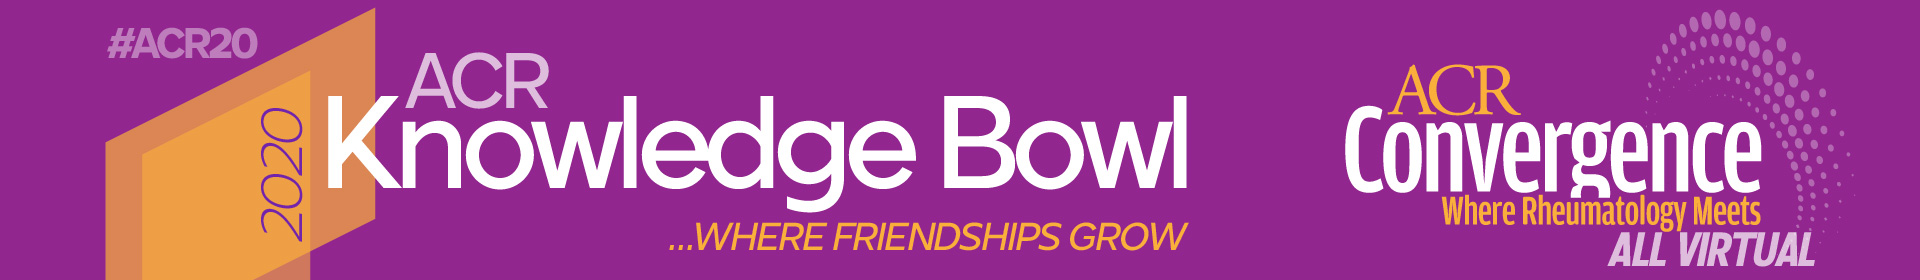 2020 ACR Knowledge Bowl